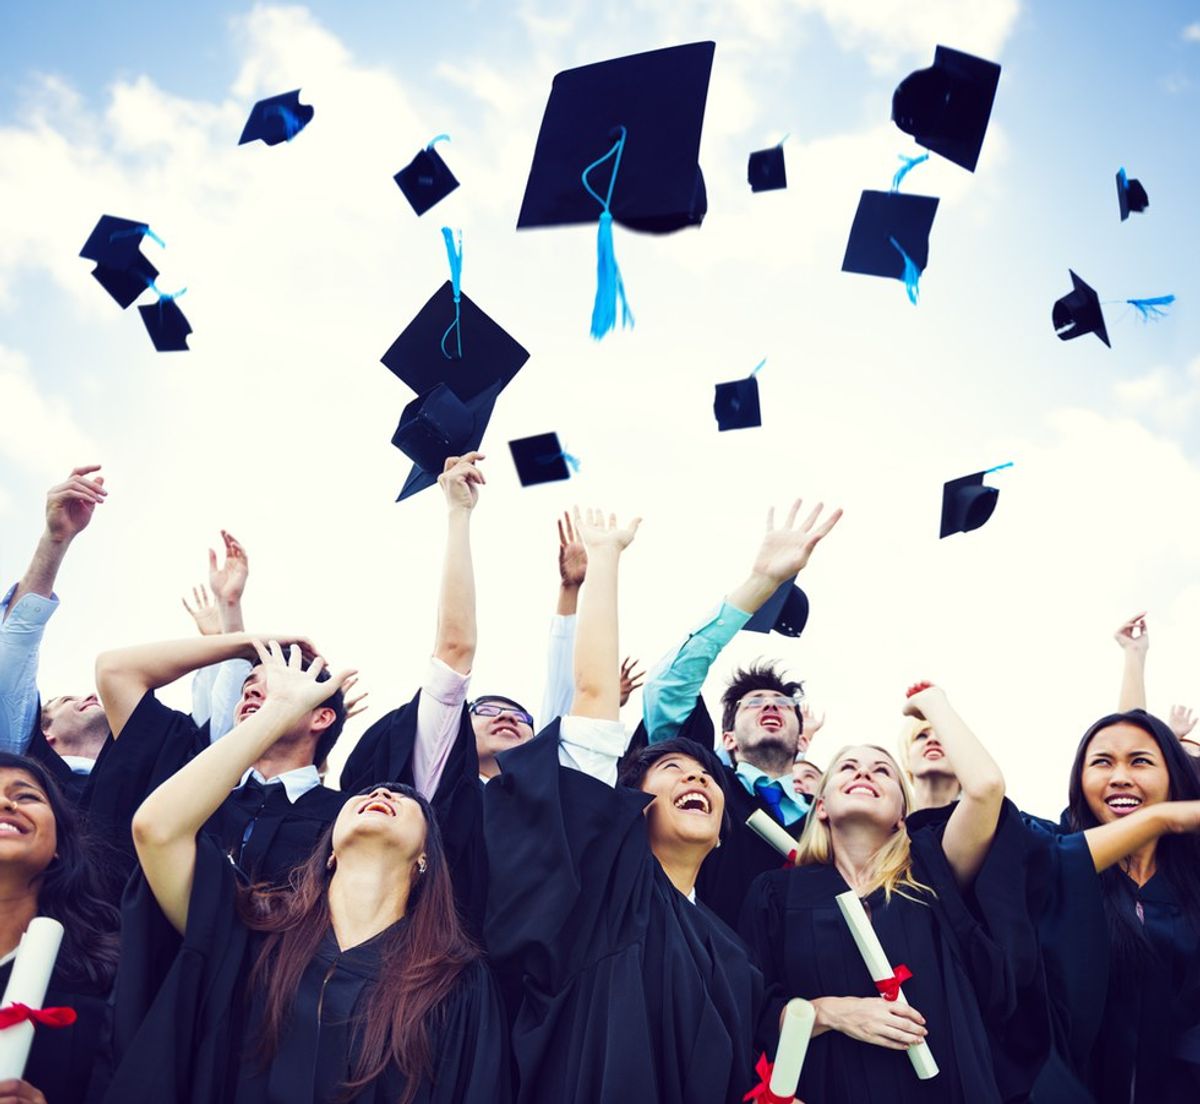 True Life: I Am Not Ready To Graduate